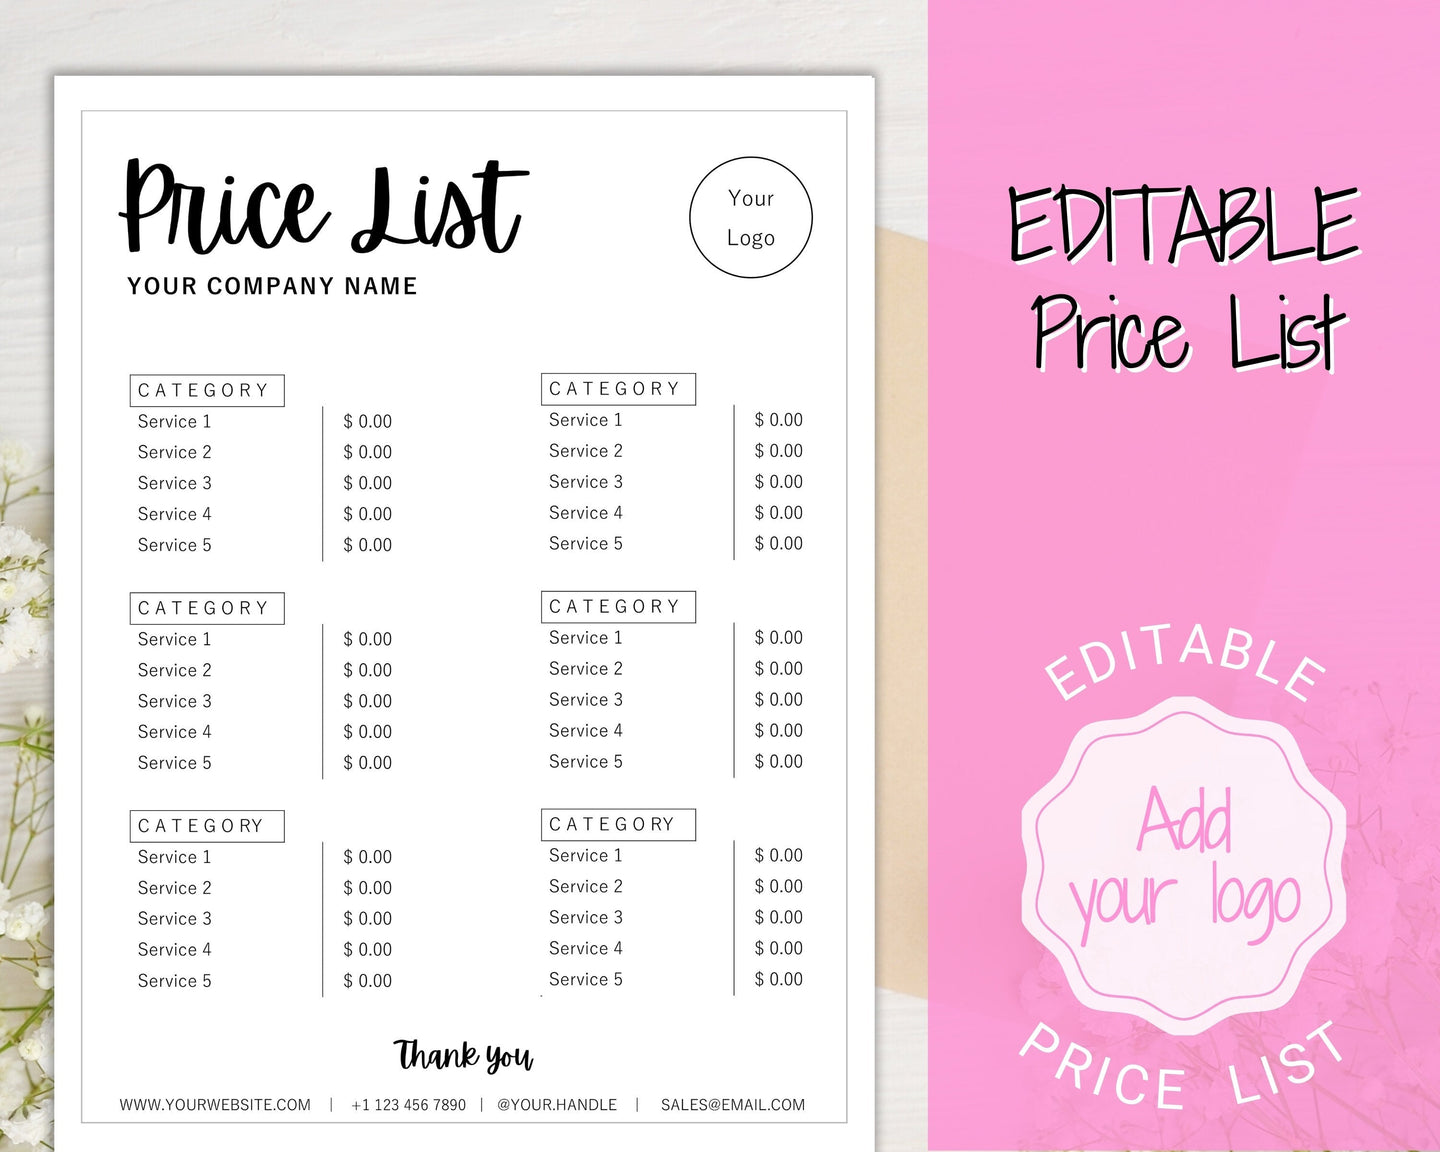 PRICE LIST Template Editable. Printable Price Sheet, Price Guide, Hair Salon, Hairdresser, Beauty, Black Monochrome, Custom Menu, Pricing | Style 7